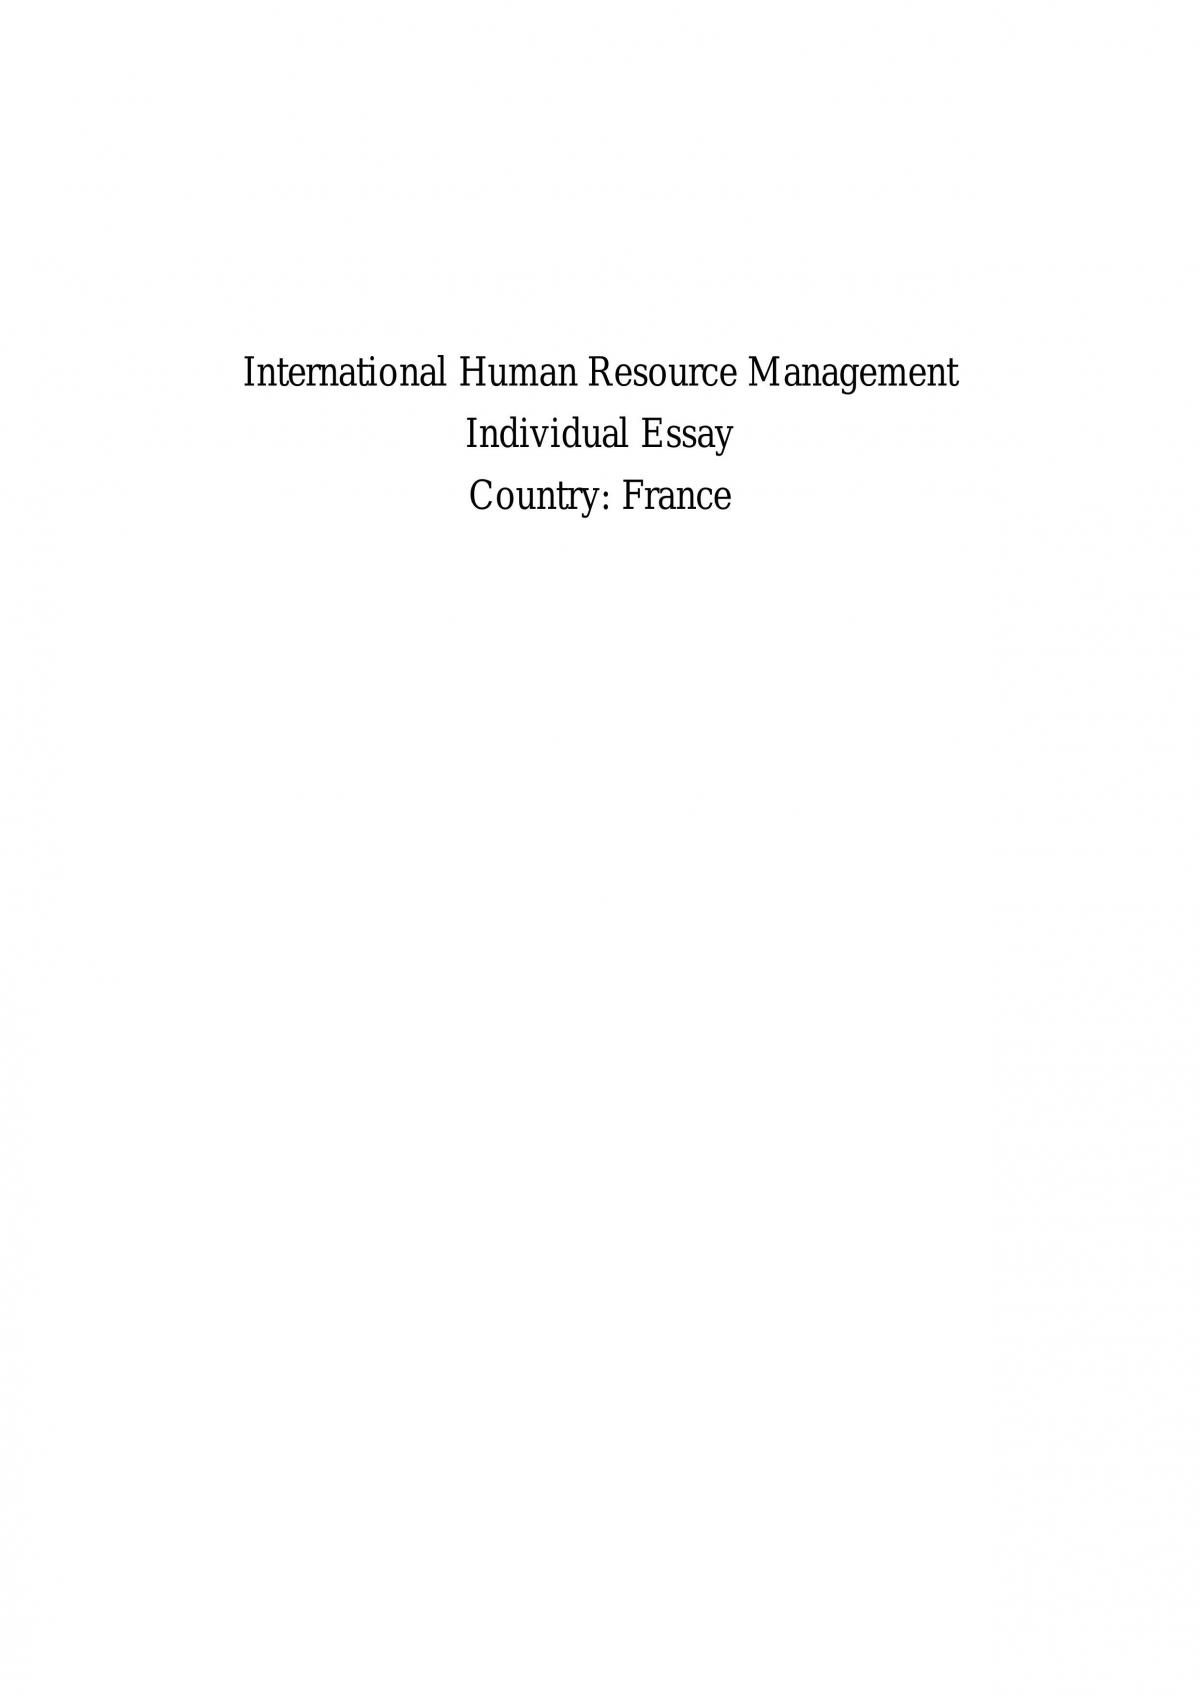 International Human Resource Management Essay - Page 1